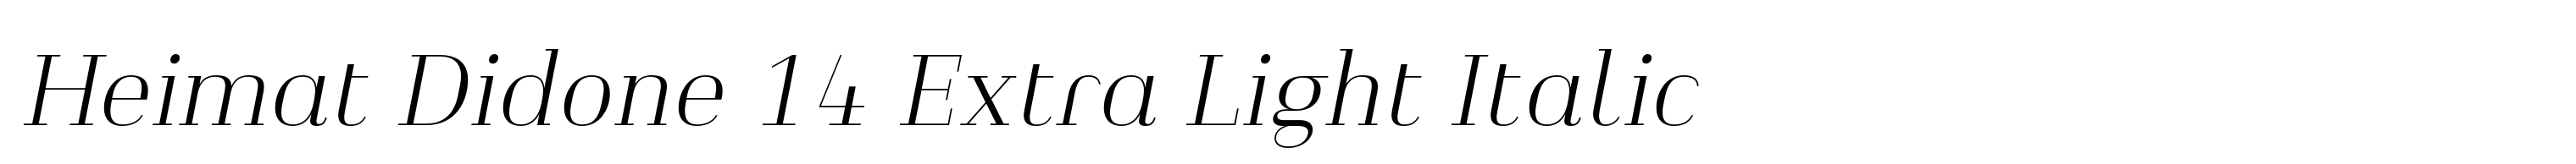 Heimat Didone 14 Extra Light Italic